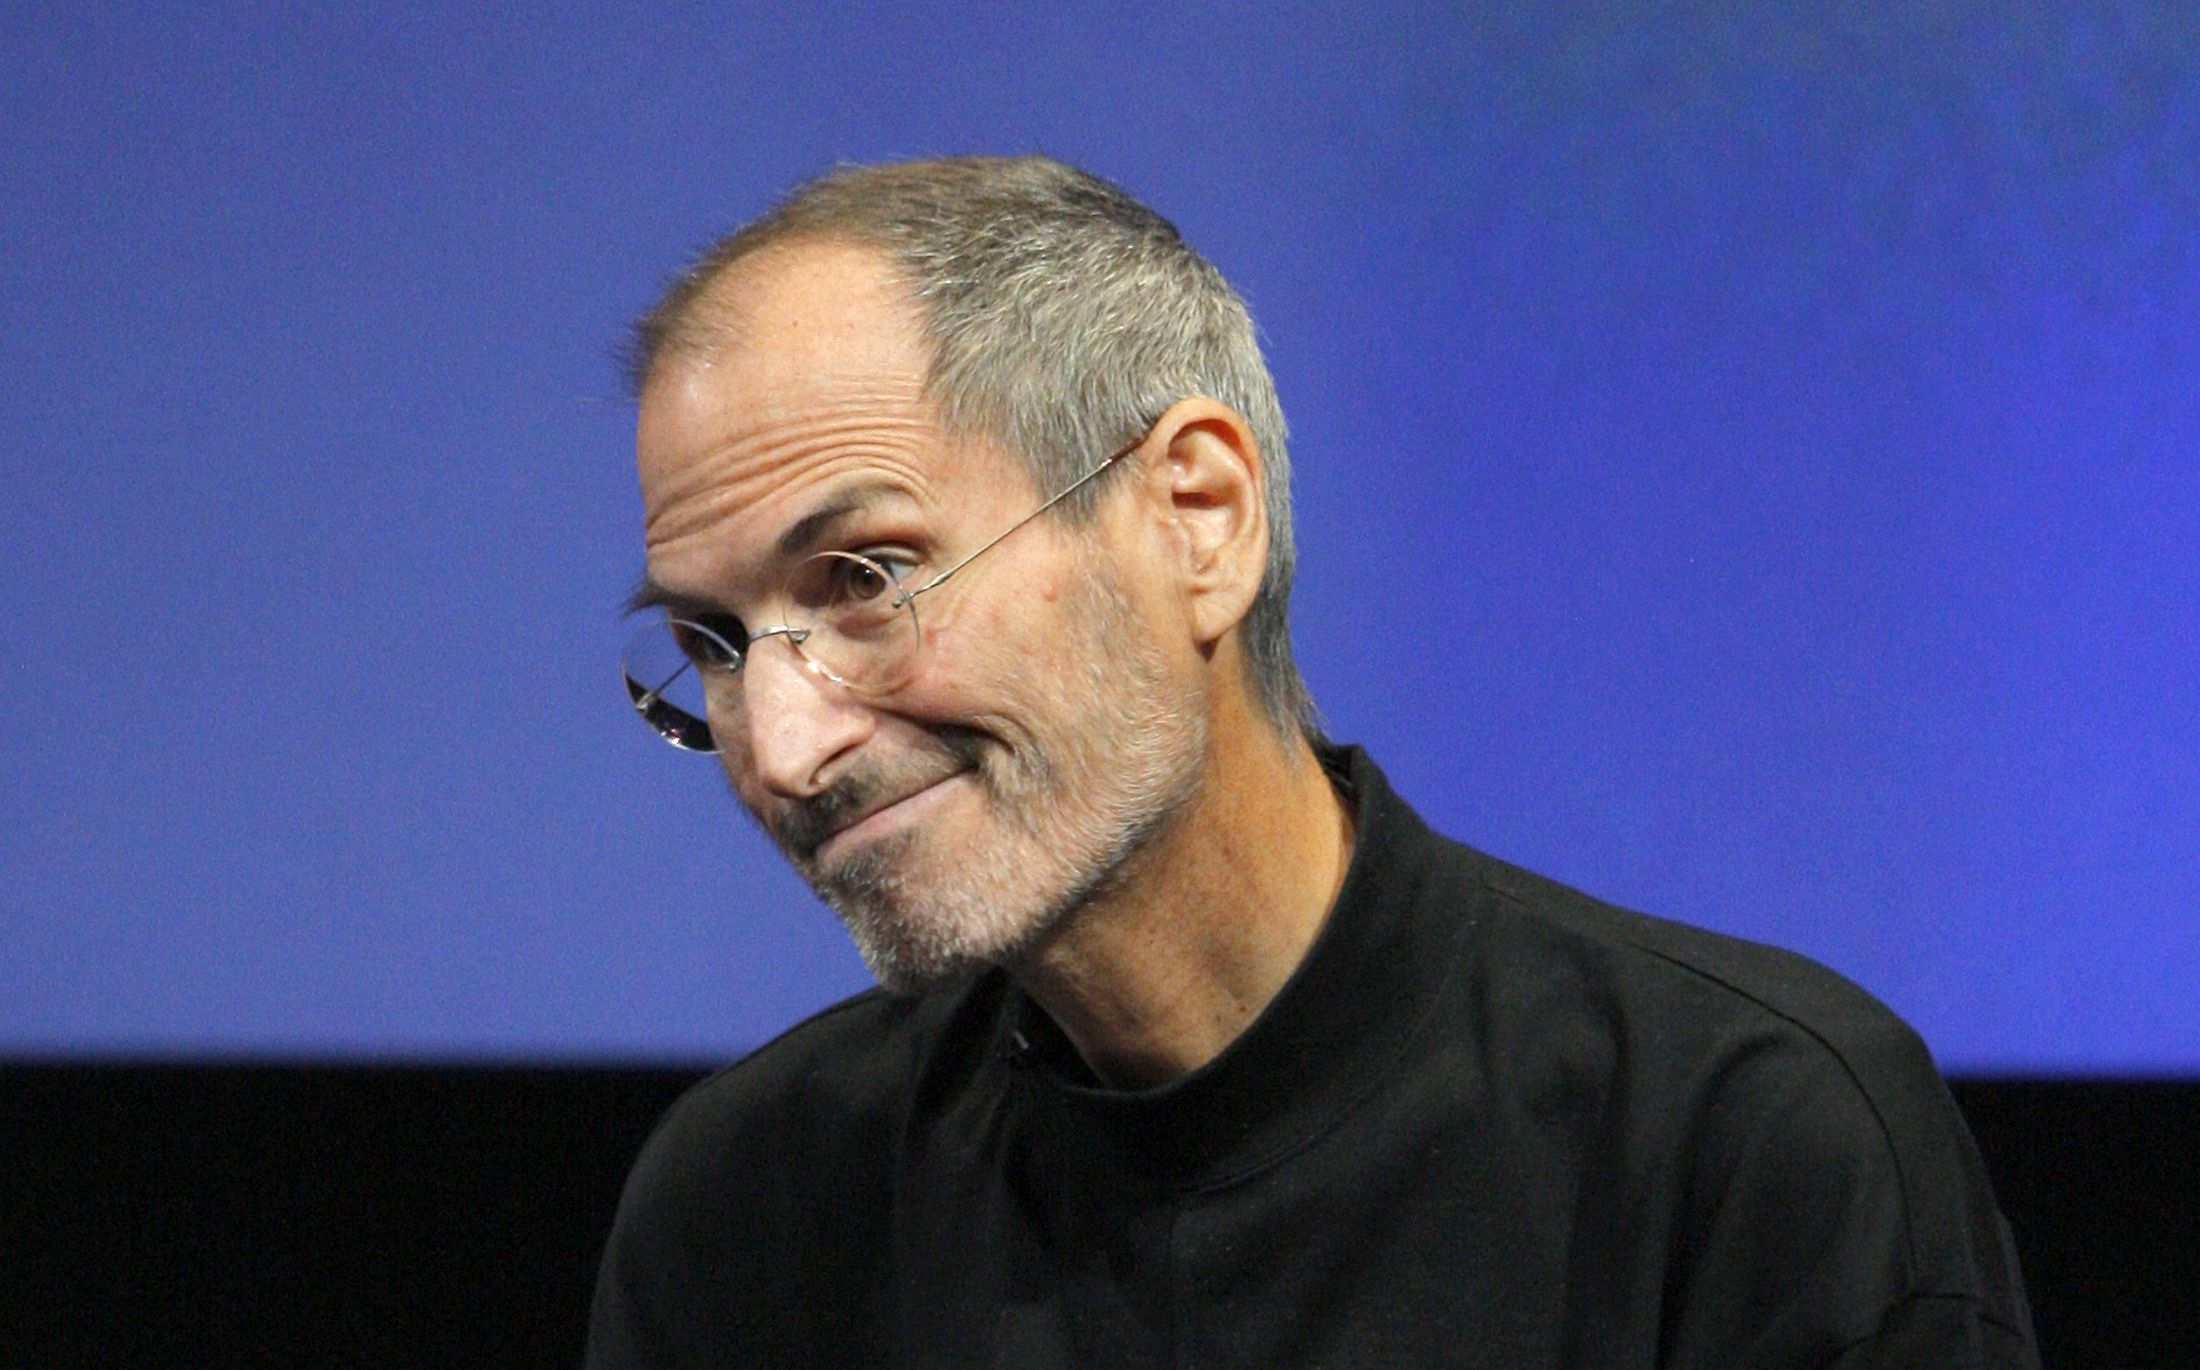 Happy 67th Birthday to Late Apple CoFounder Steve Jobs